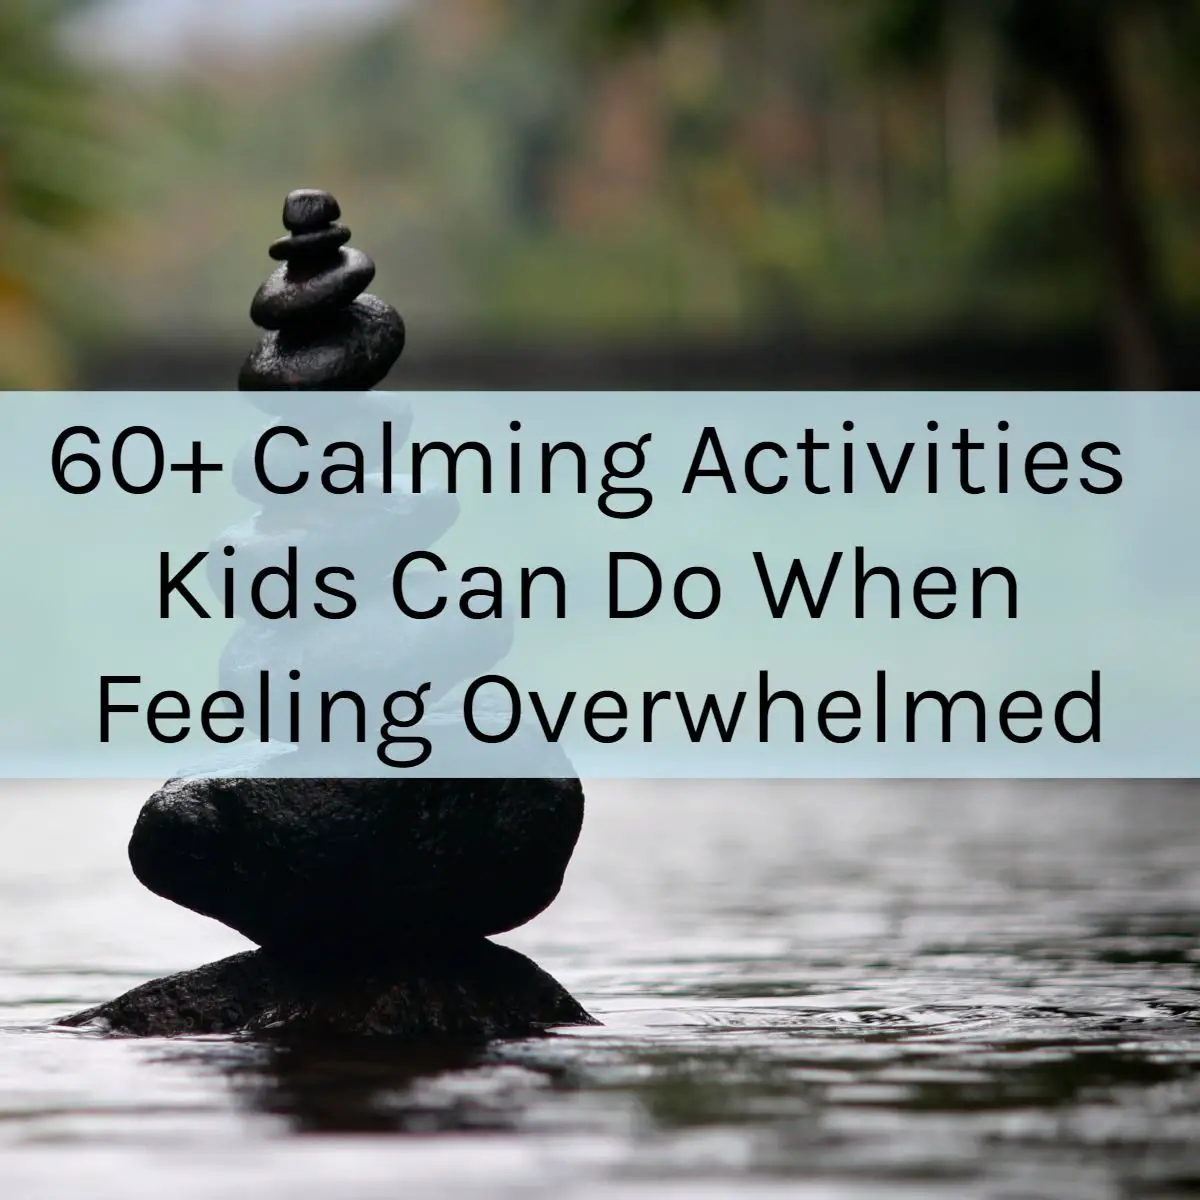 60+ Calming Activities Kids Can Do When Feeling Overwhelmed